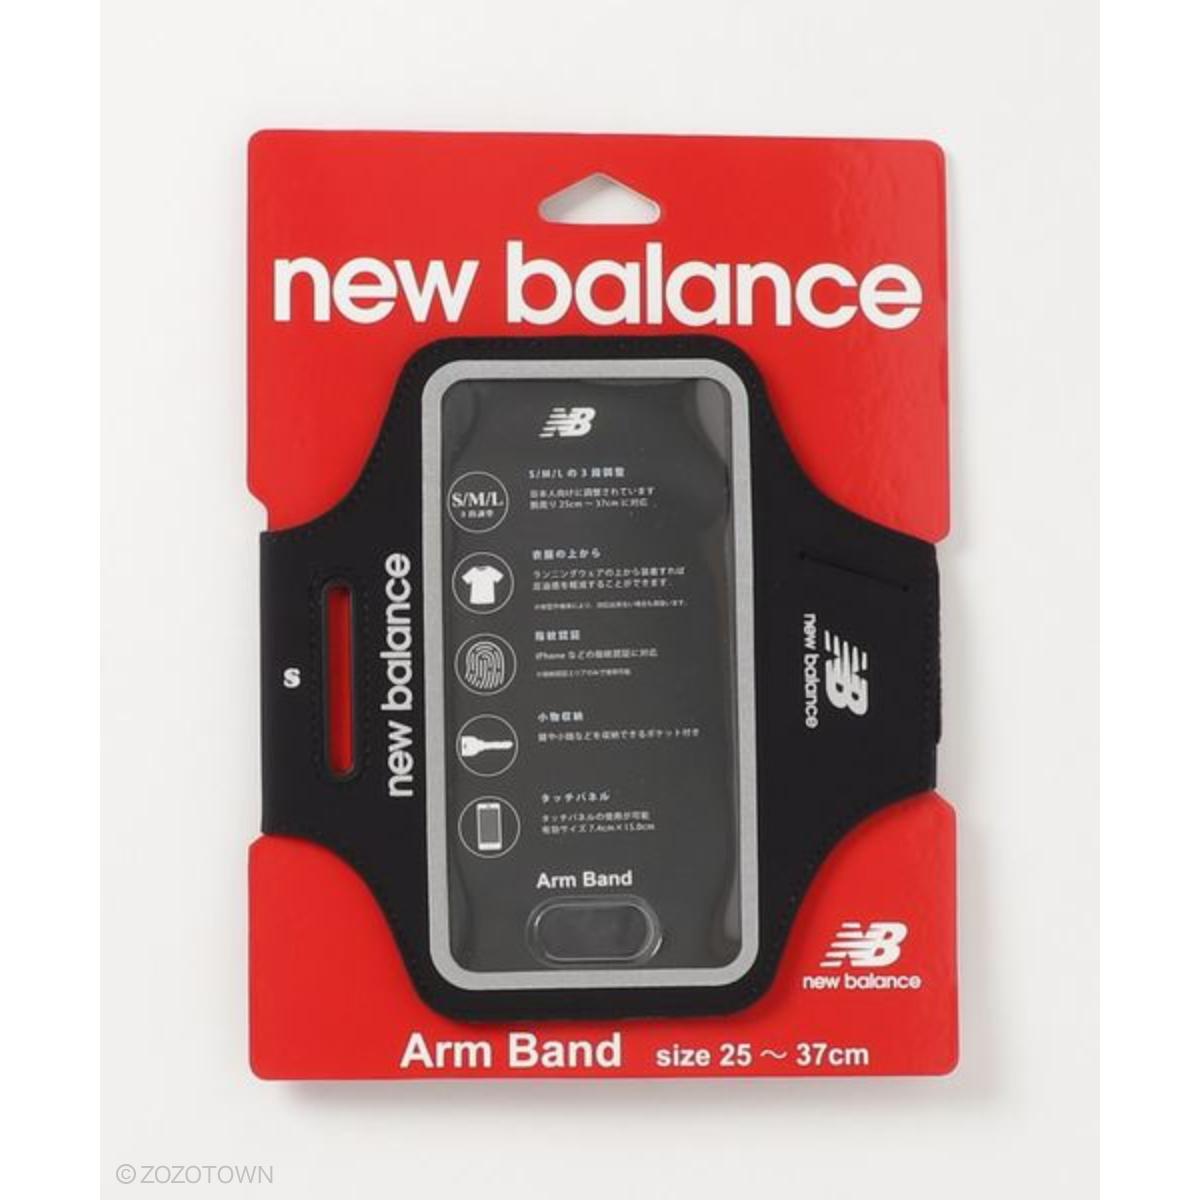 【New Balance】 New Balance [アームバンド] スポーツ ランニンググッズ